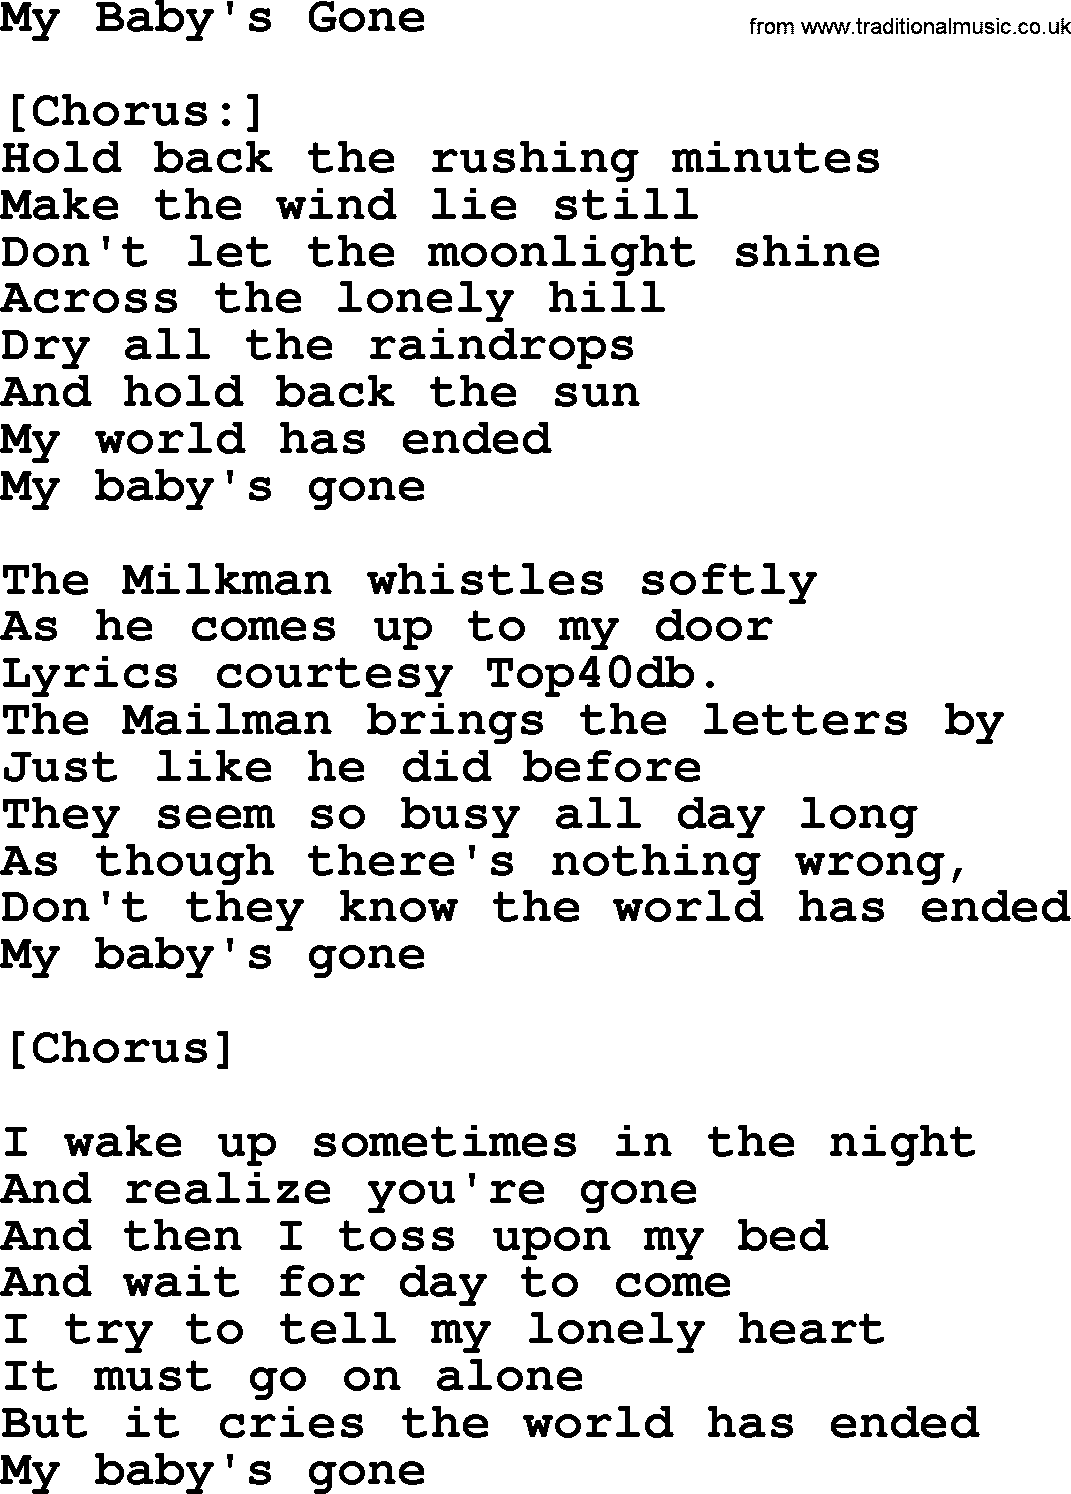 Willie Nelson song: My Baby's Gone lyrics